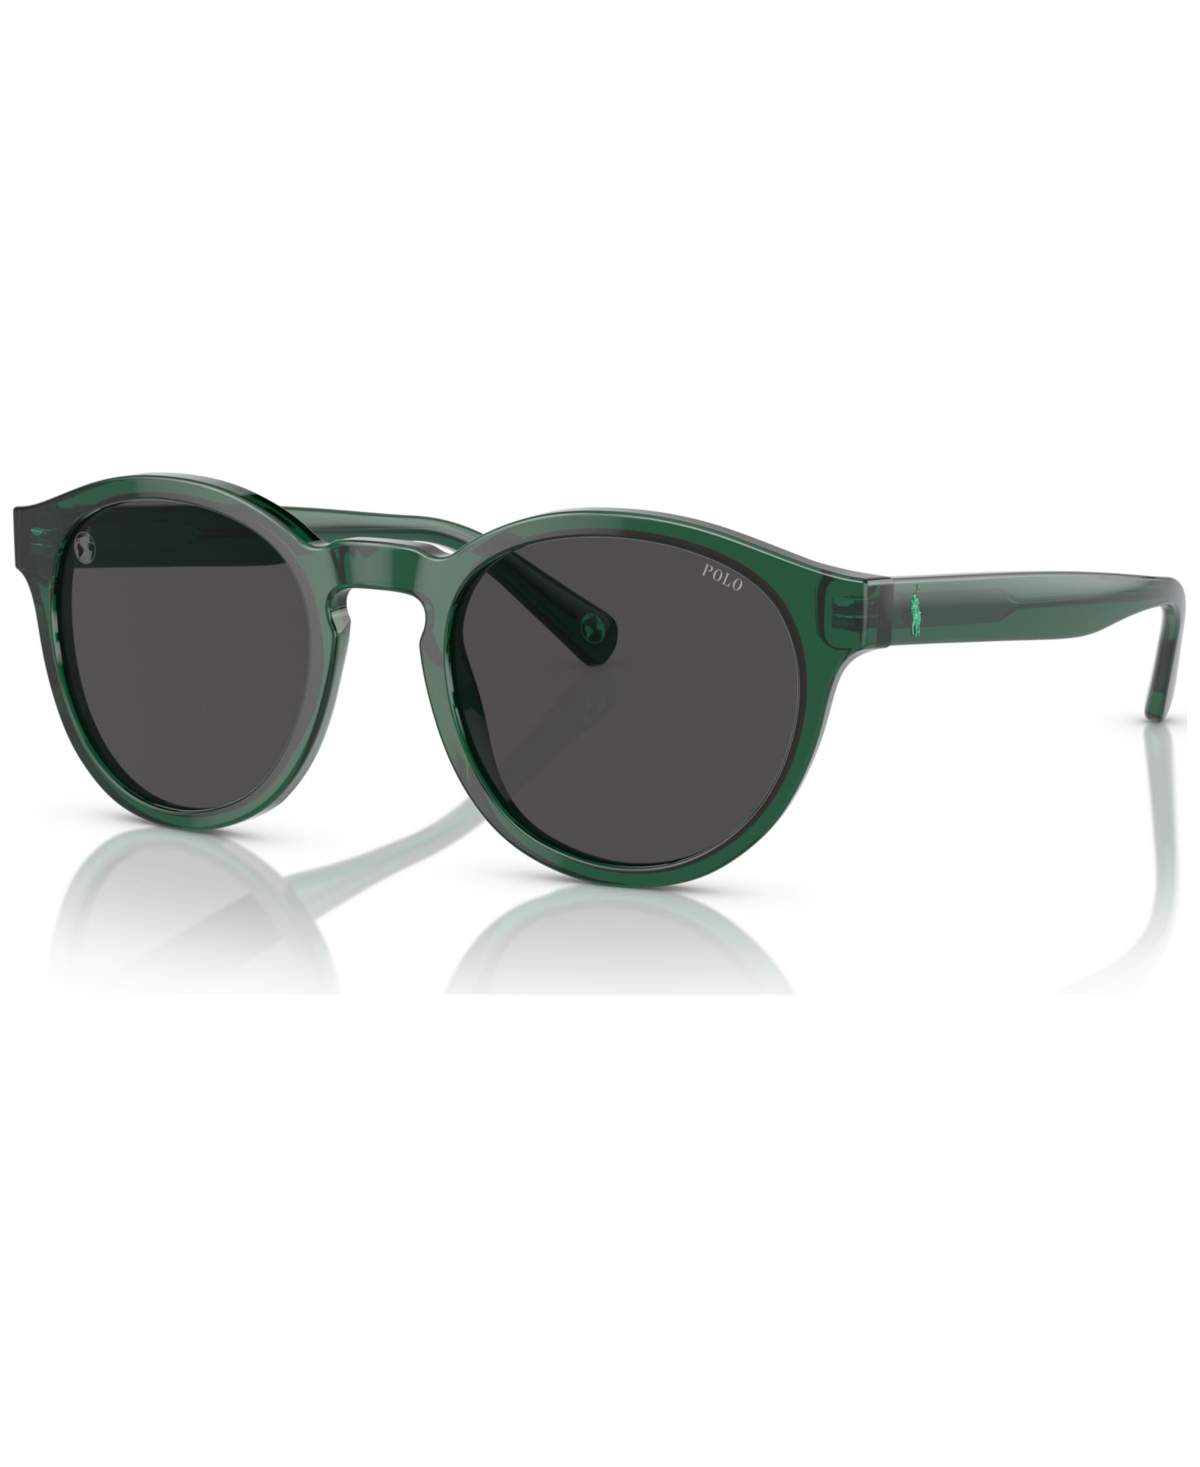 Polo Ralph Lauren Men's Sunglasses, Ph419251-x 51 In Shiny Transparent Green